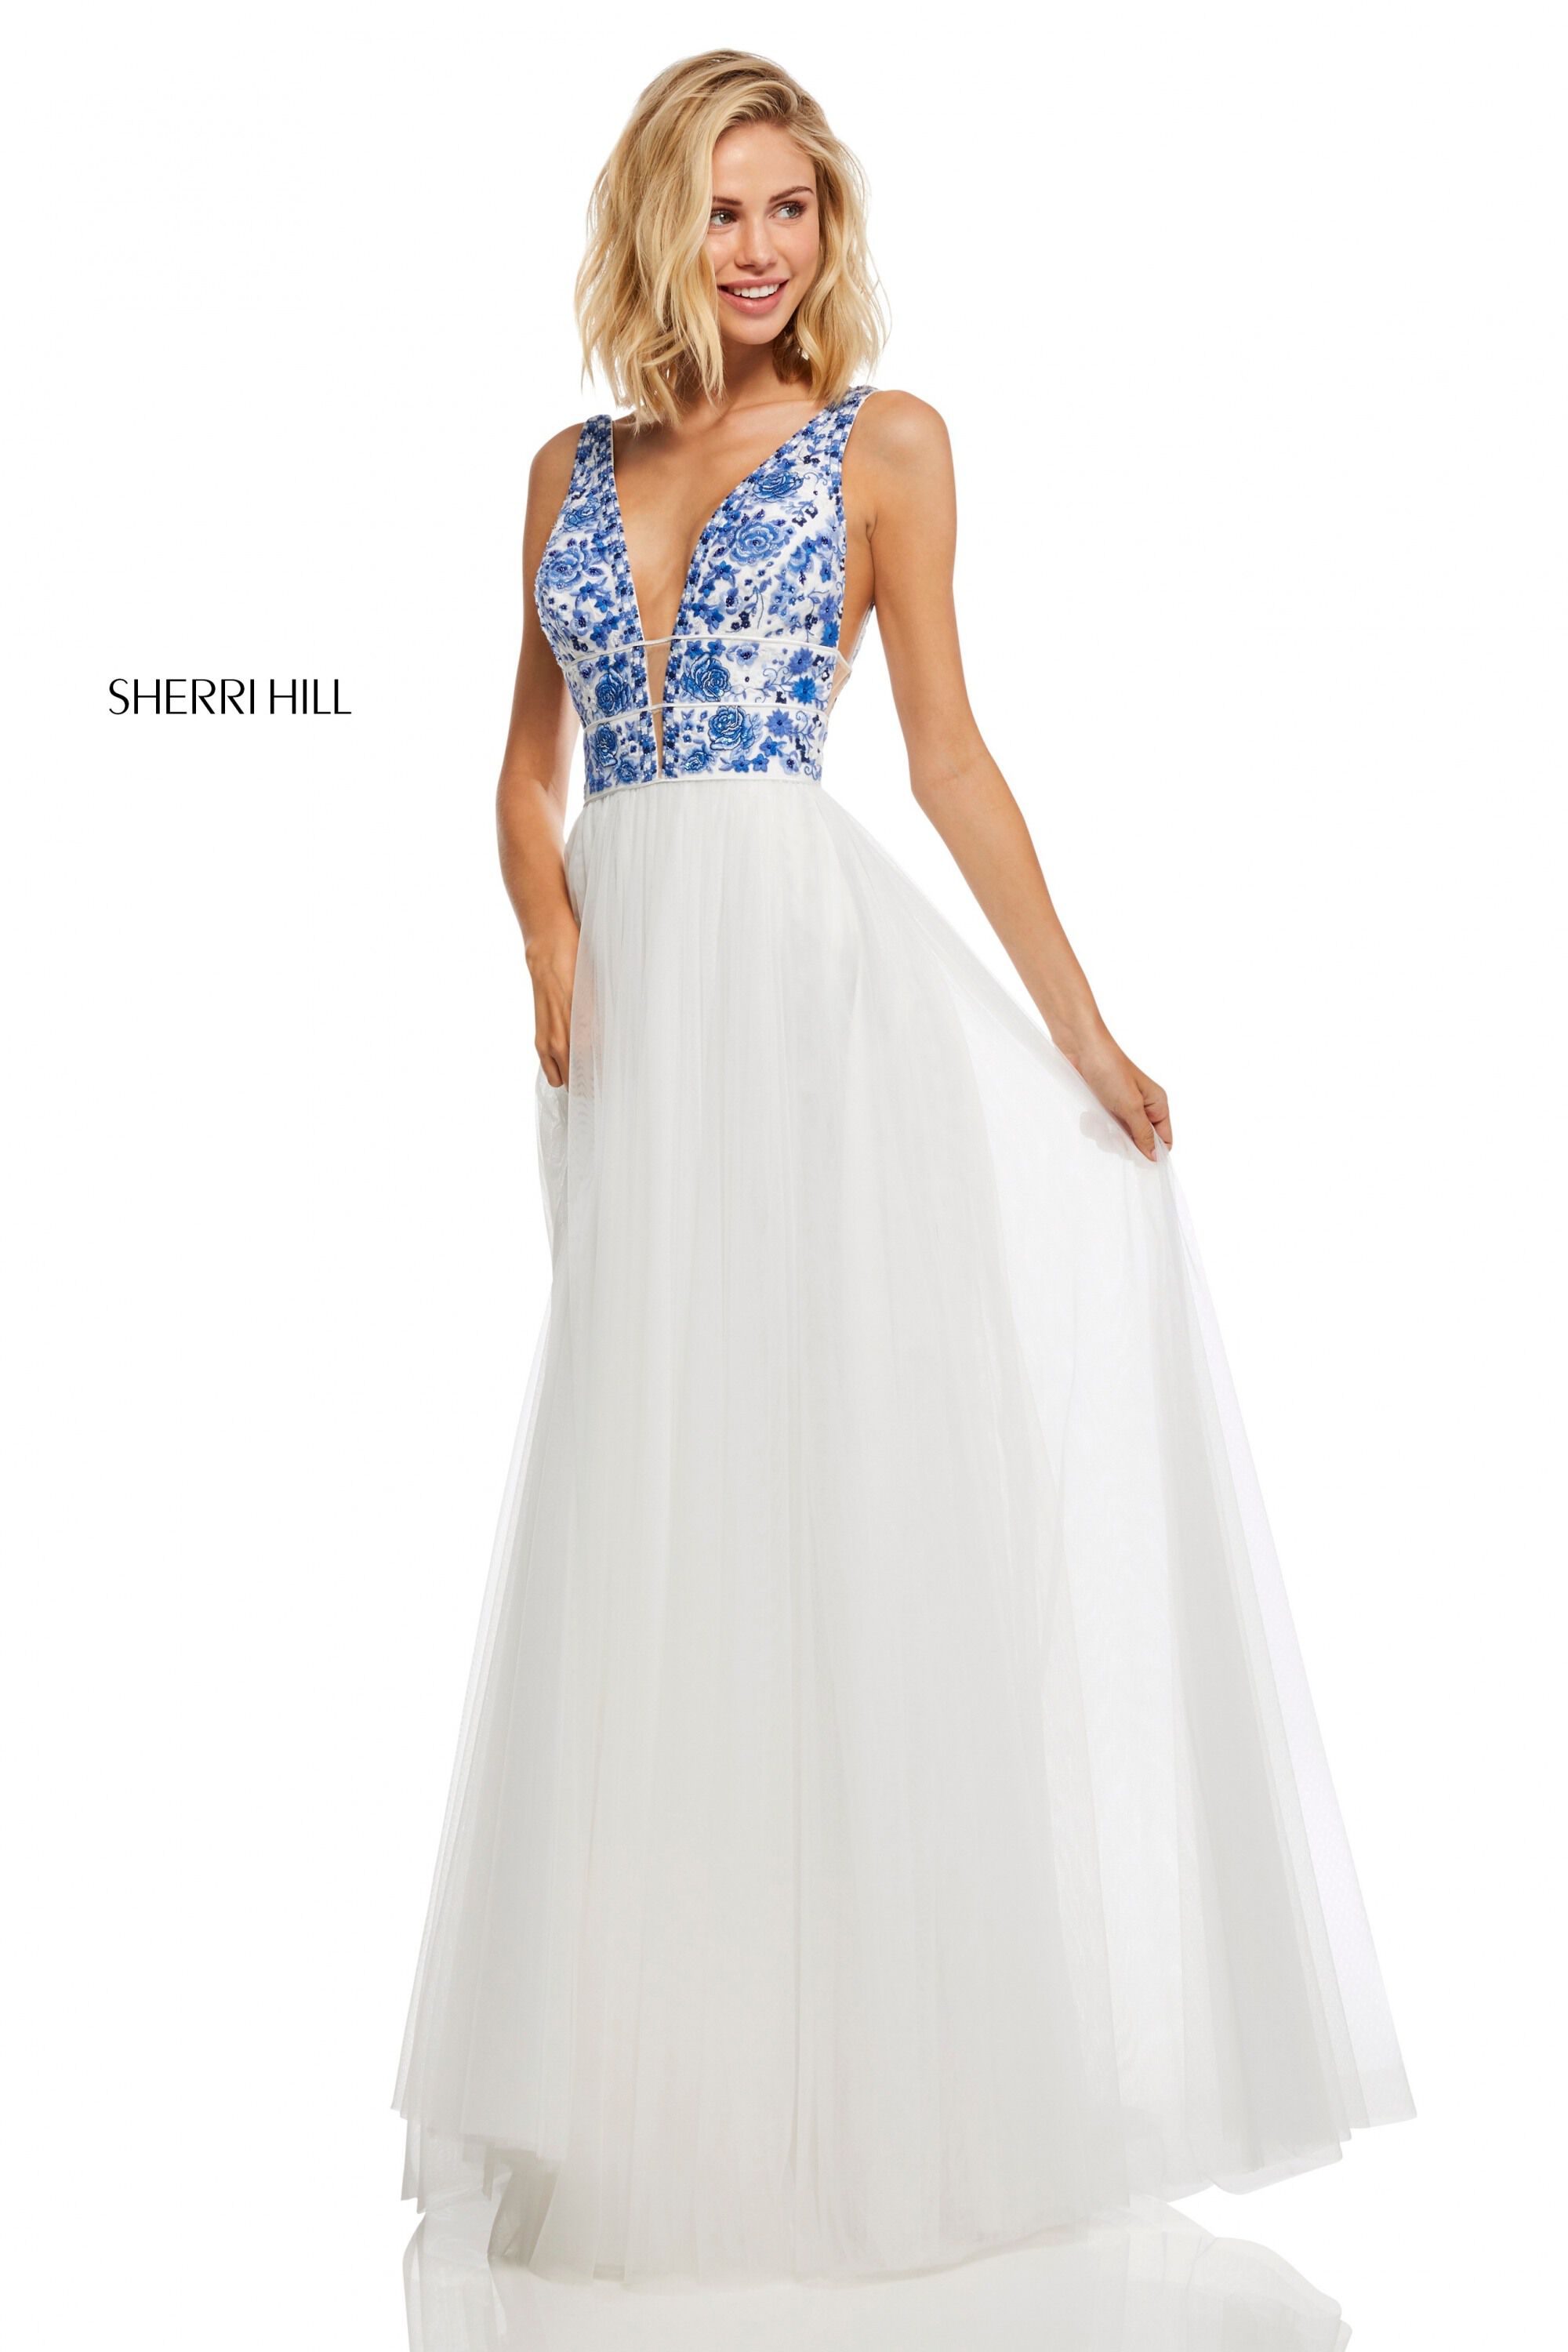 Sherri Hill 2019 prom dresses